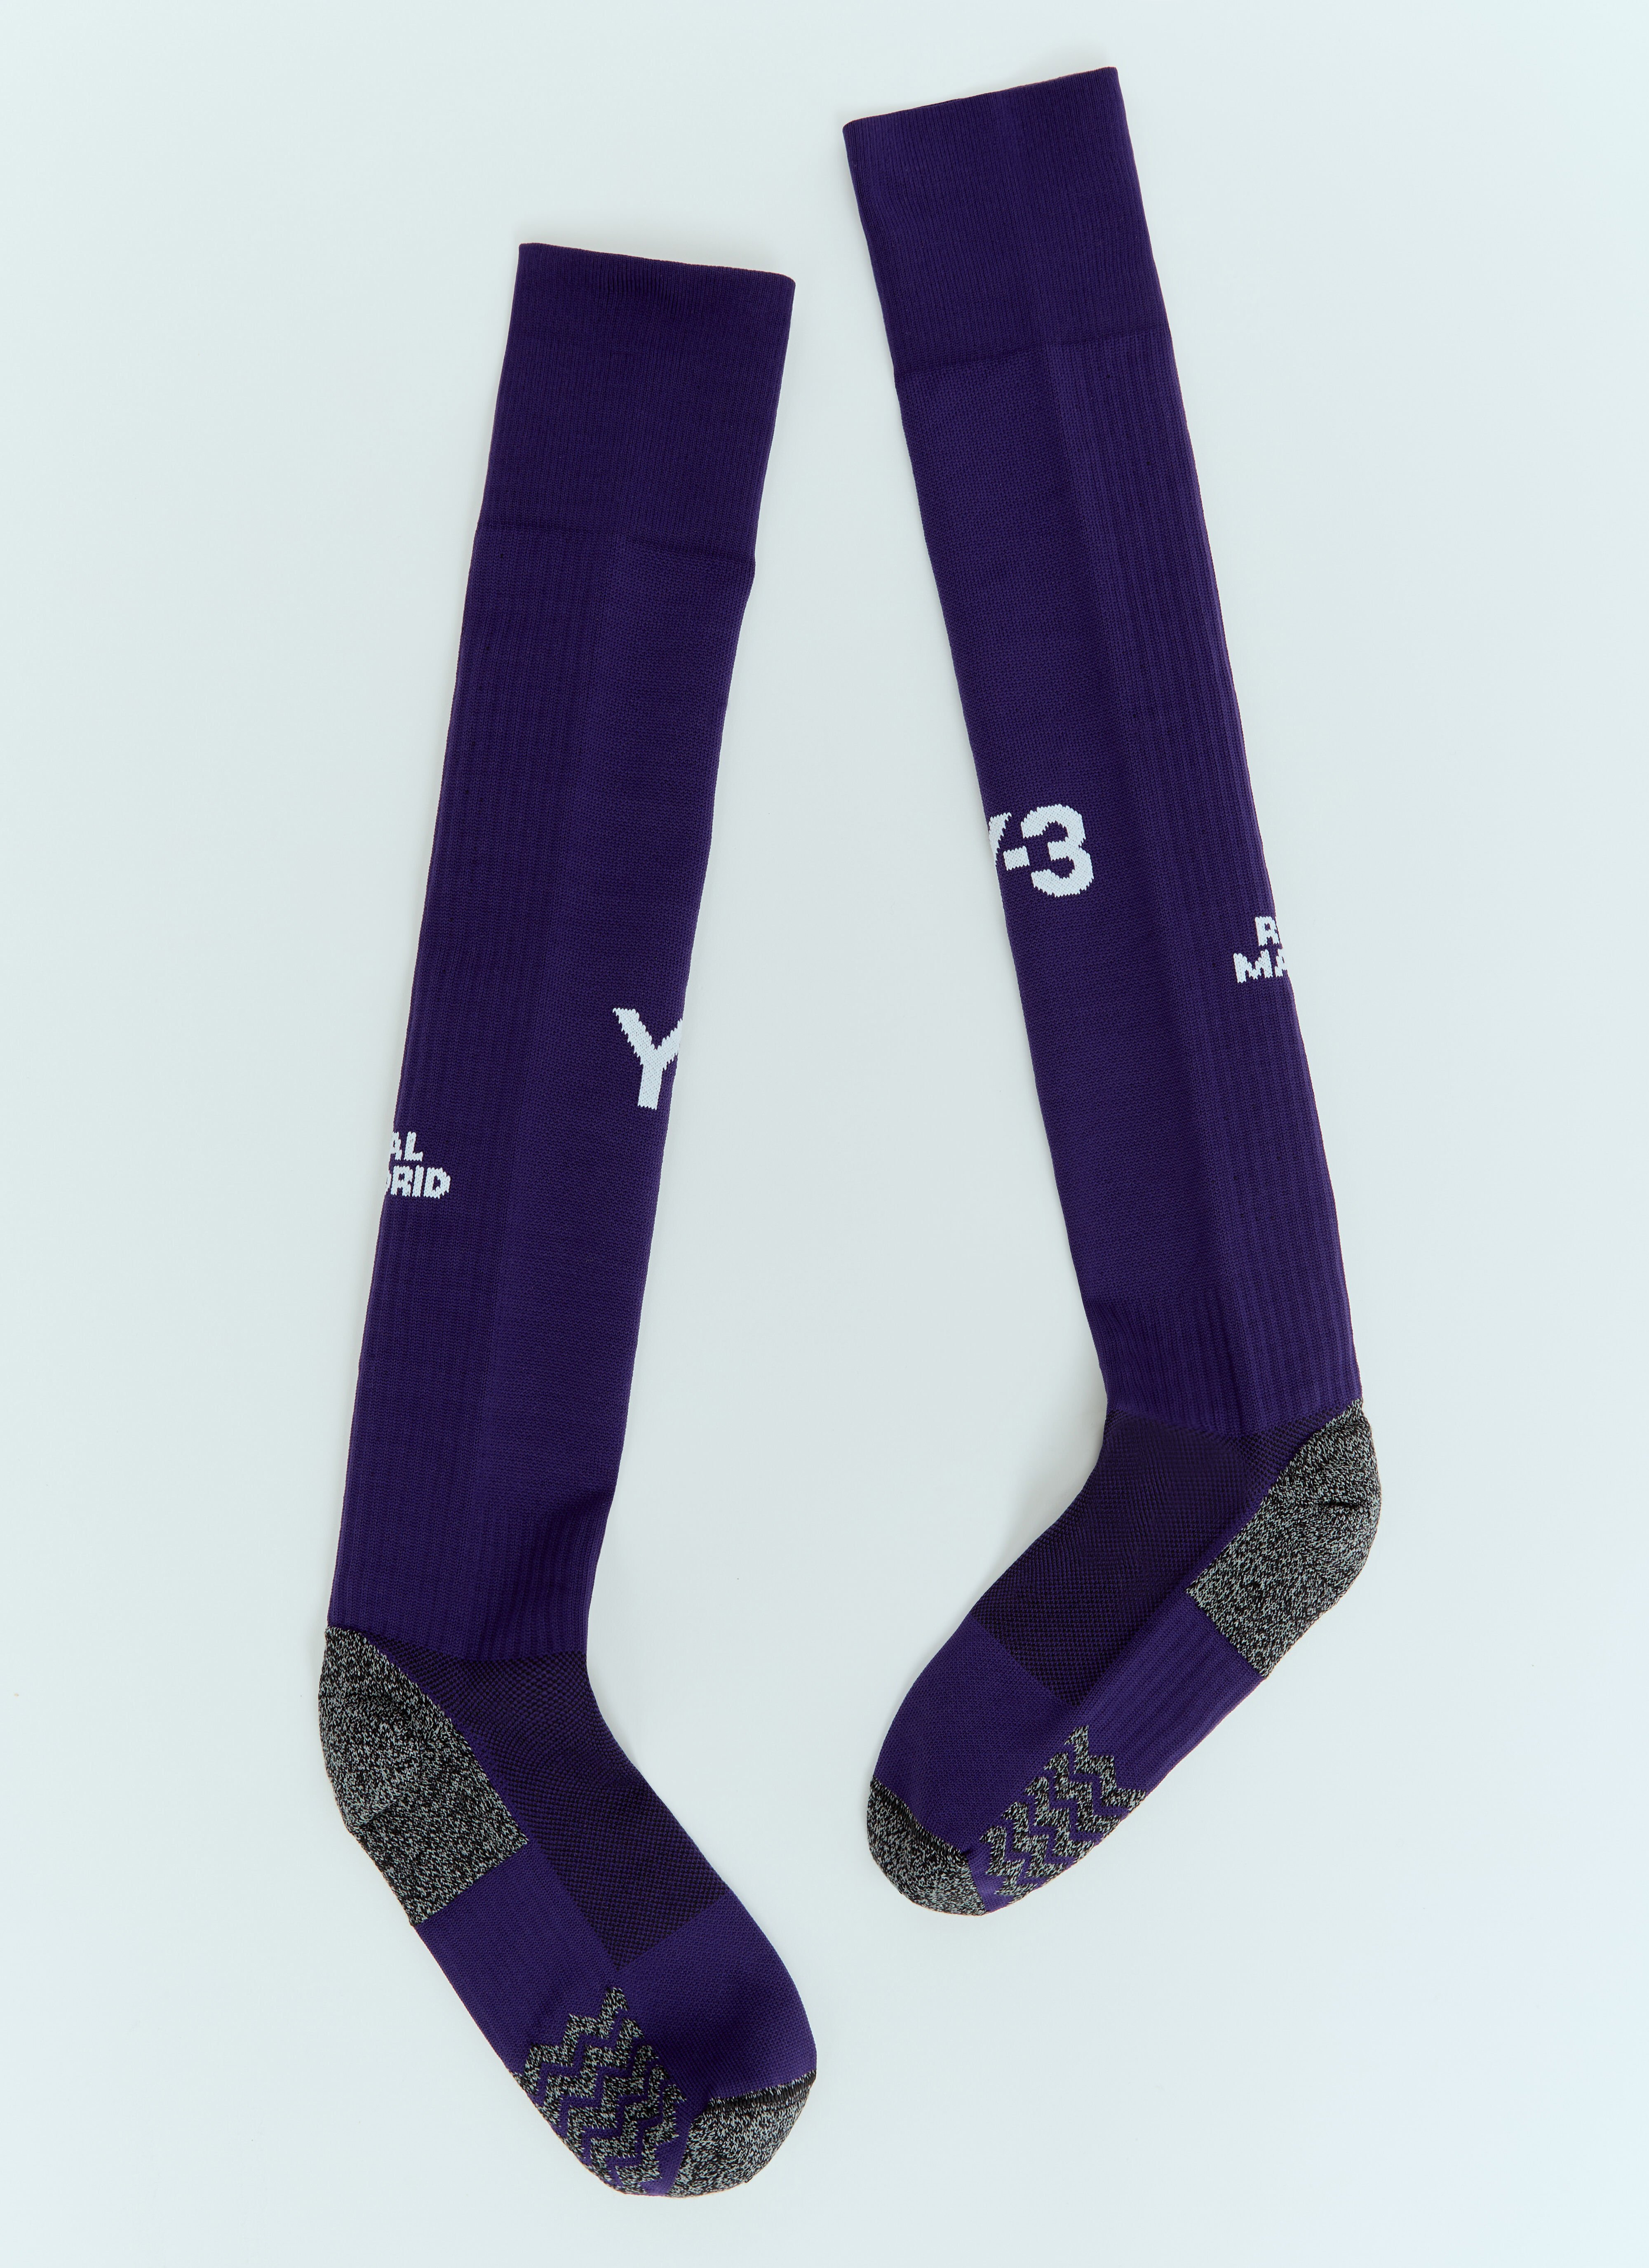 Y-3 Logo Jacquard Socks White yyy0356030